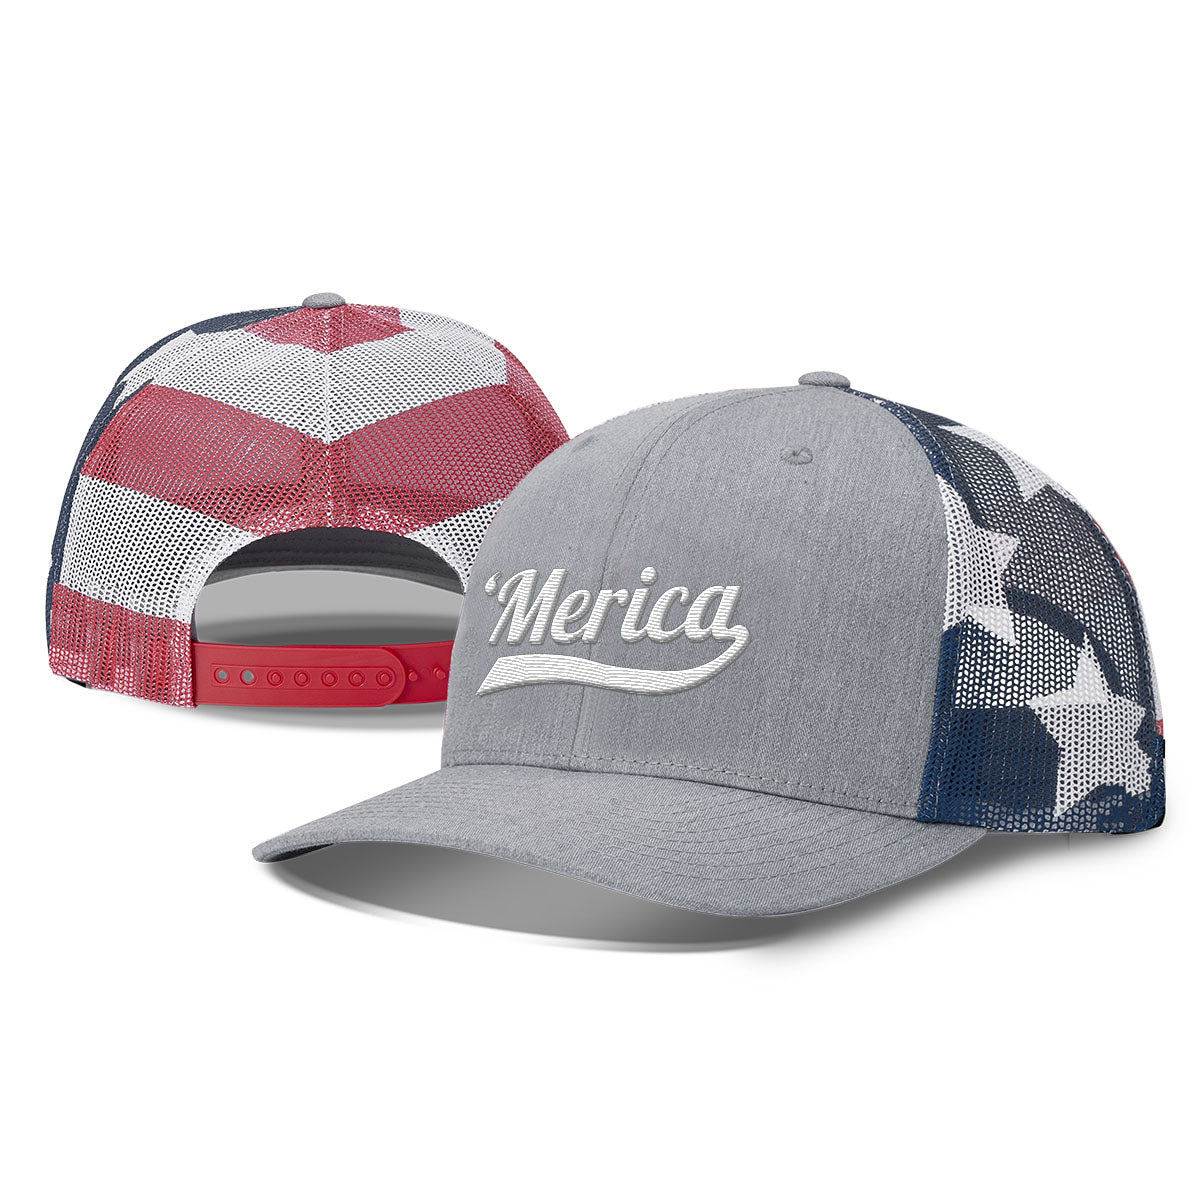 Merica Patriotic Hats